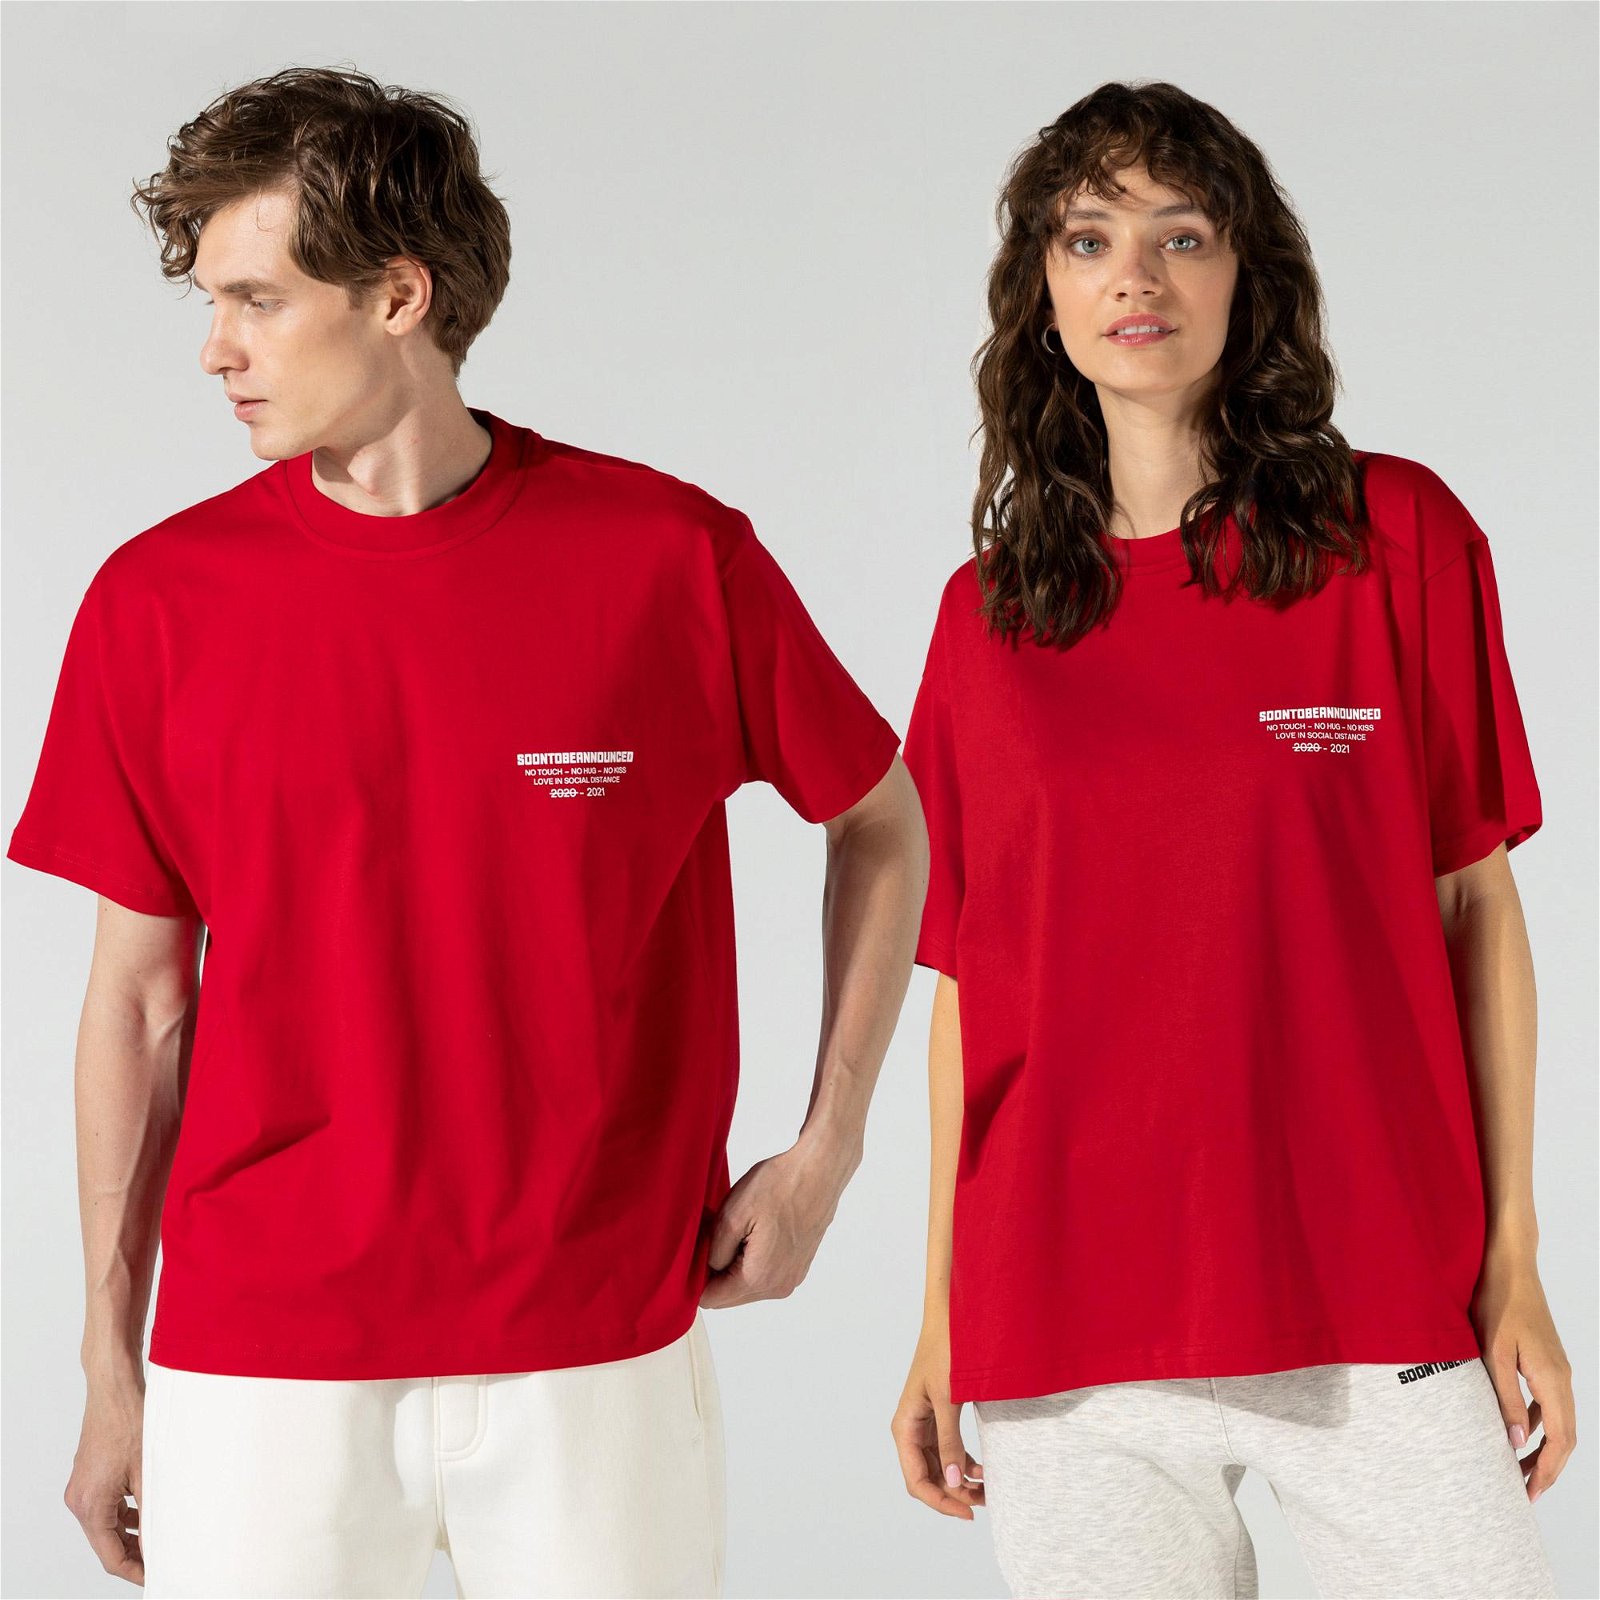 SOONTOBEANNOUNCED 2020-2021 Printed Unisex Kırmızı T-Shirt